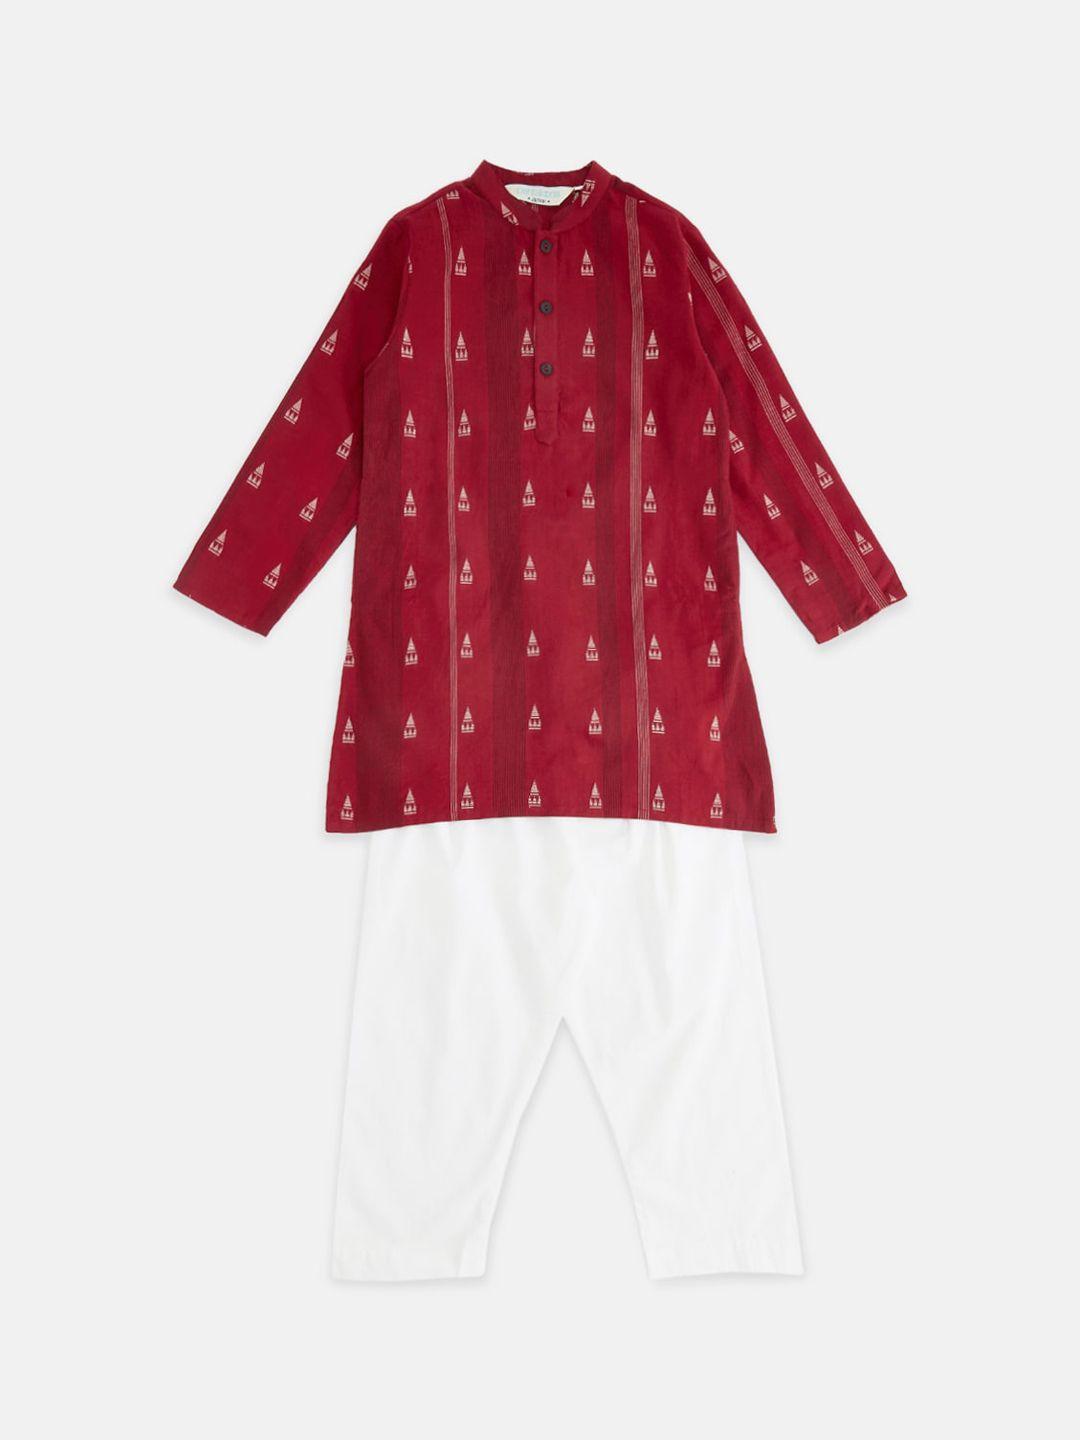 indus route by pantaloons boys red & white printed pure cotton kurta with pyjamas